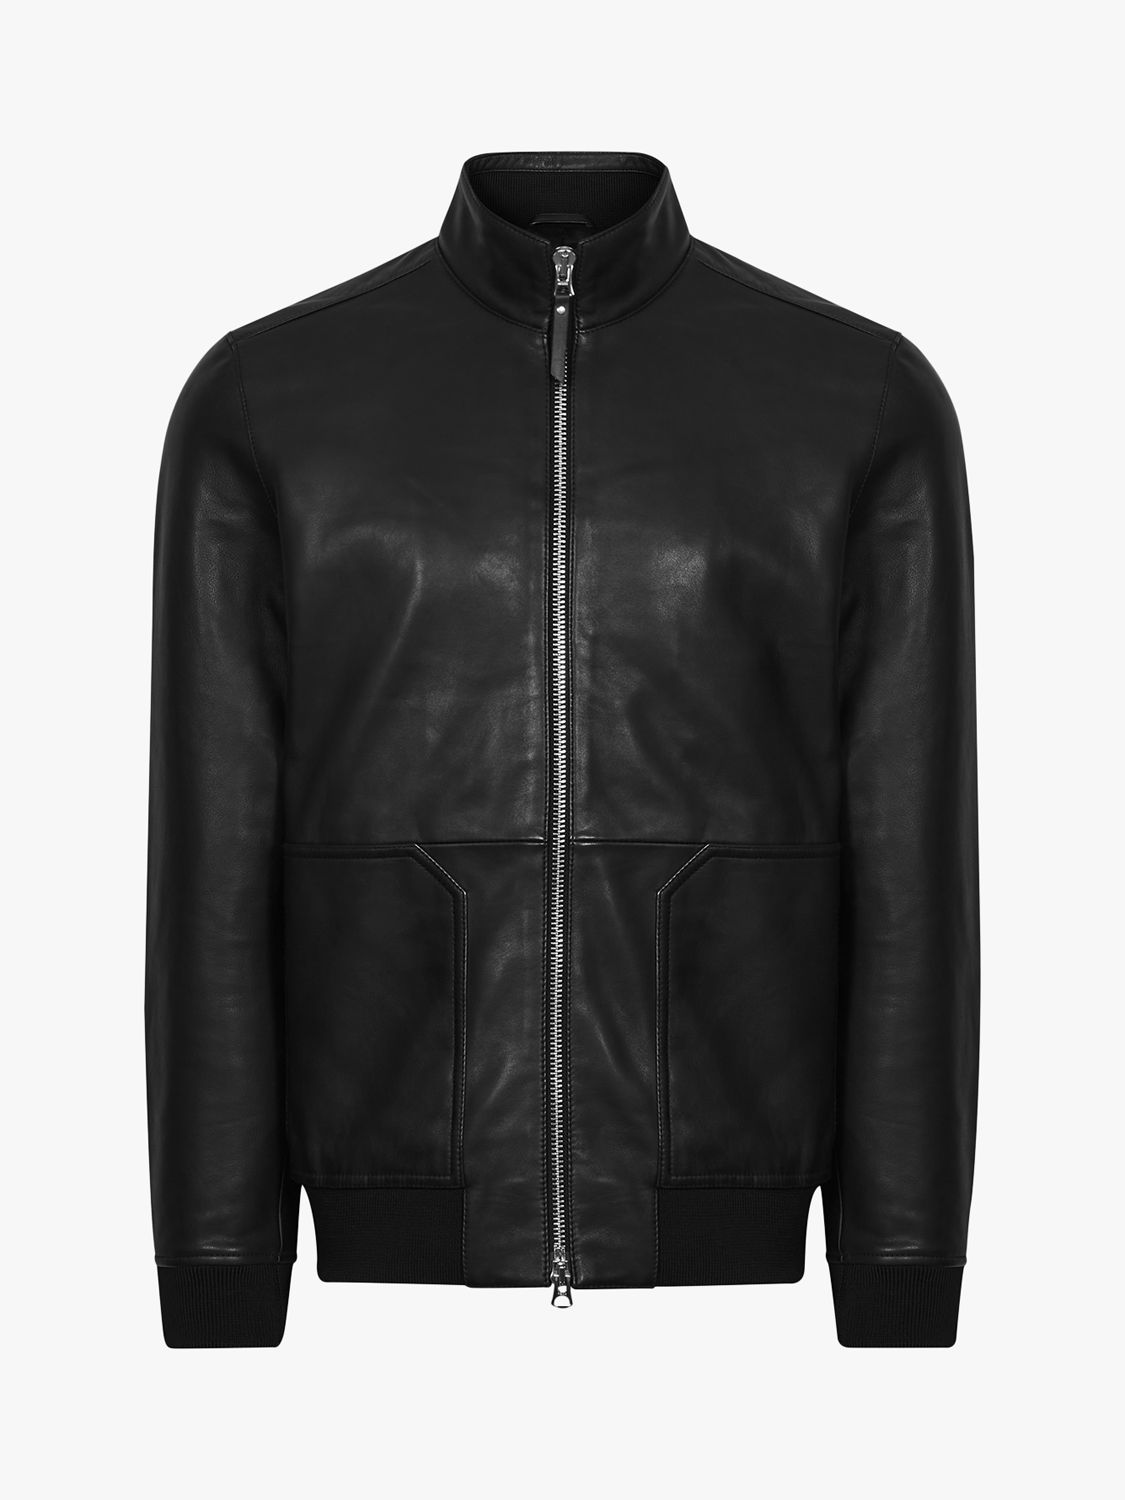 Reiss Walton Funnel Neck Leather Biker Jacket at John Lewis & Partners